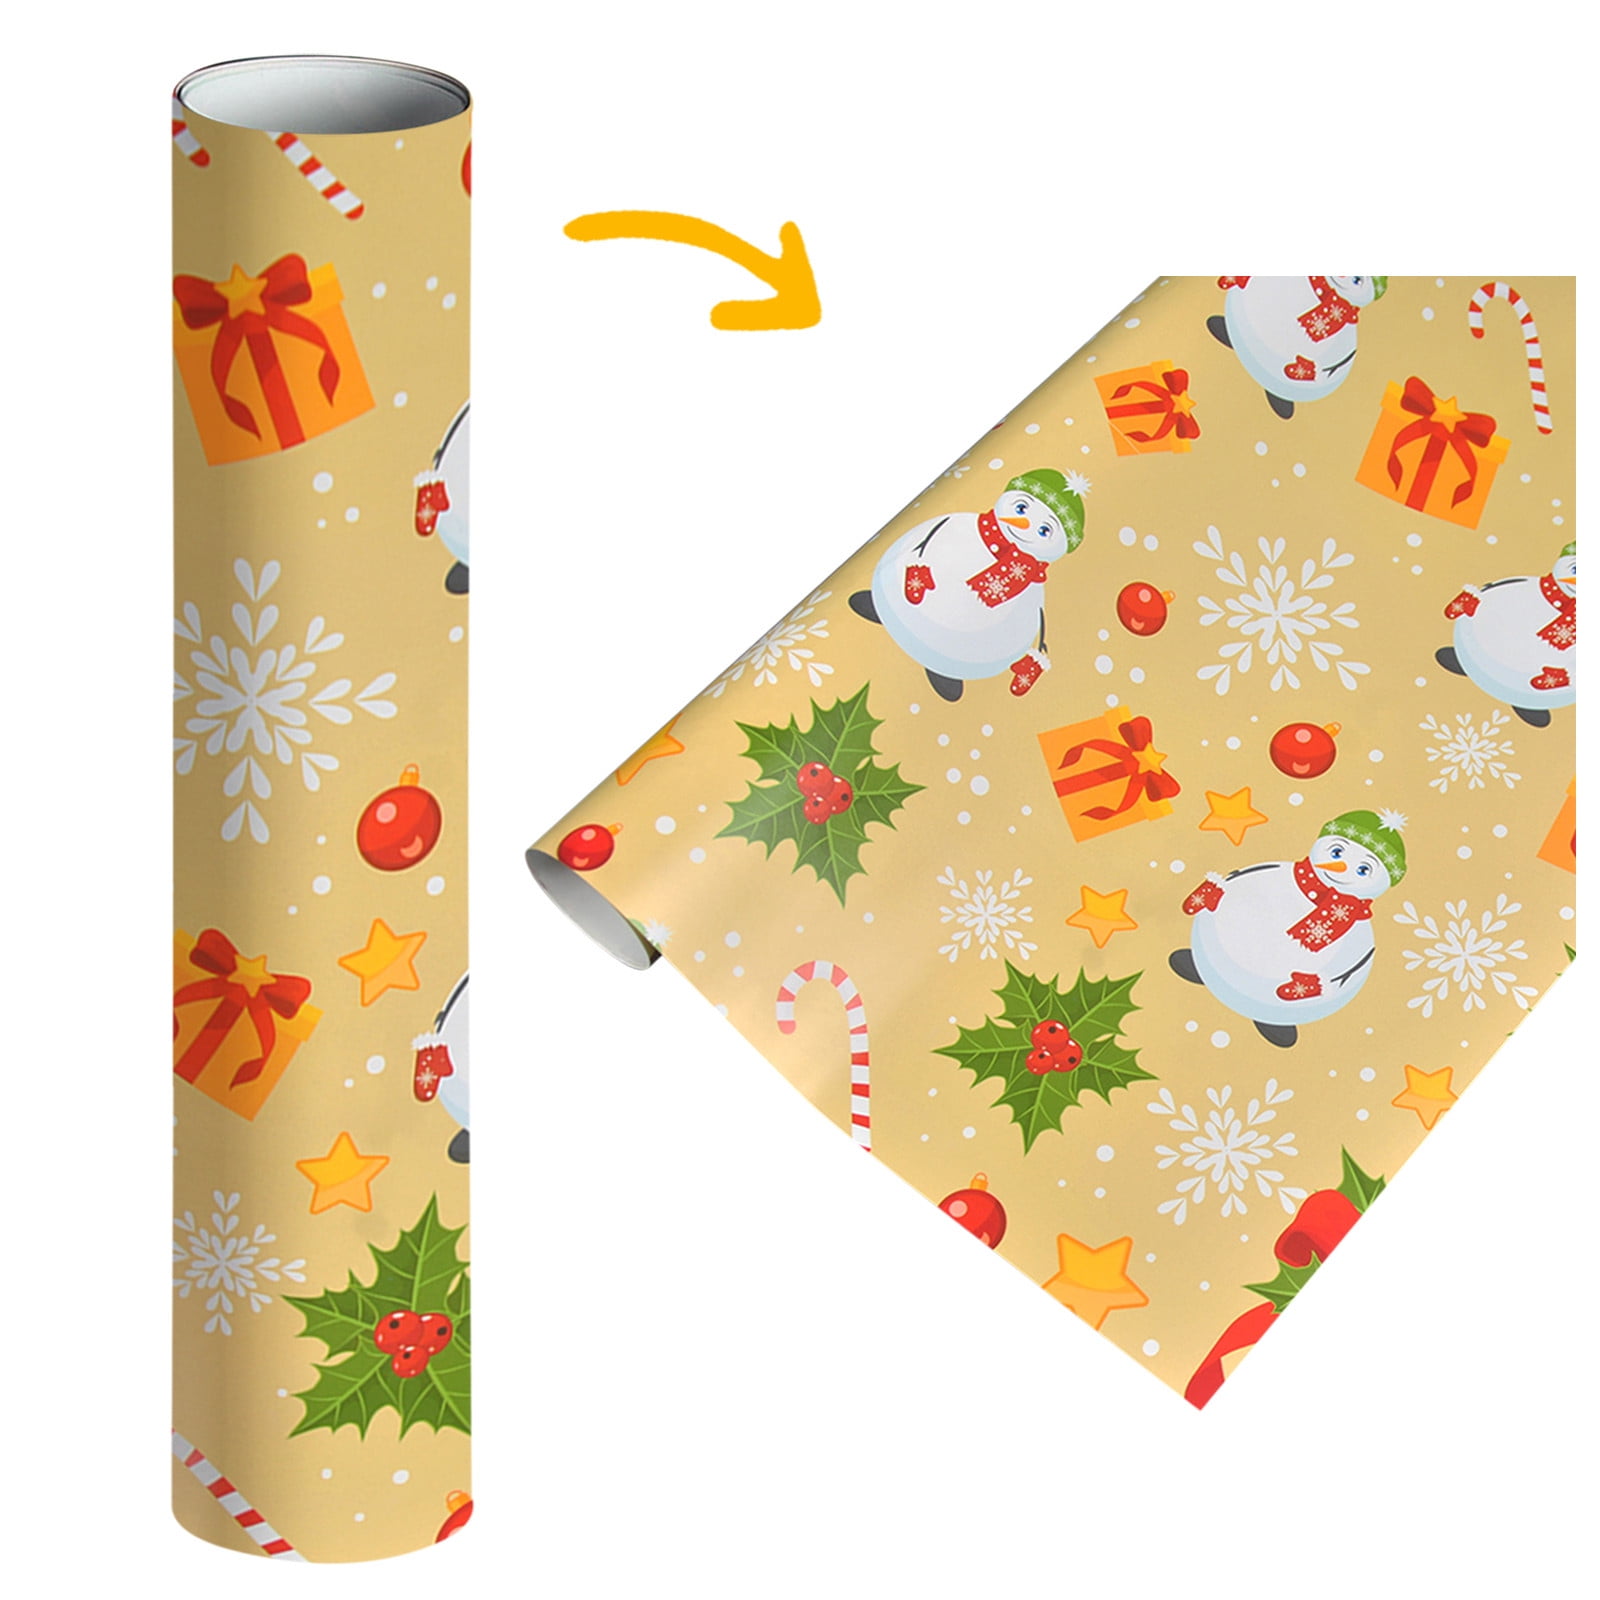 Vintage Christmas Wrap Wrapping 20 Full Sheets 10 Designs 80 SQ Feet